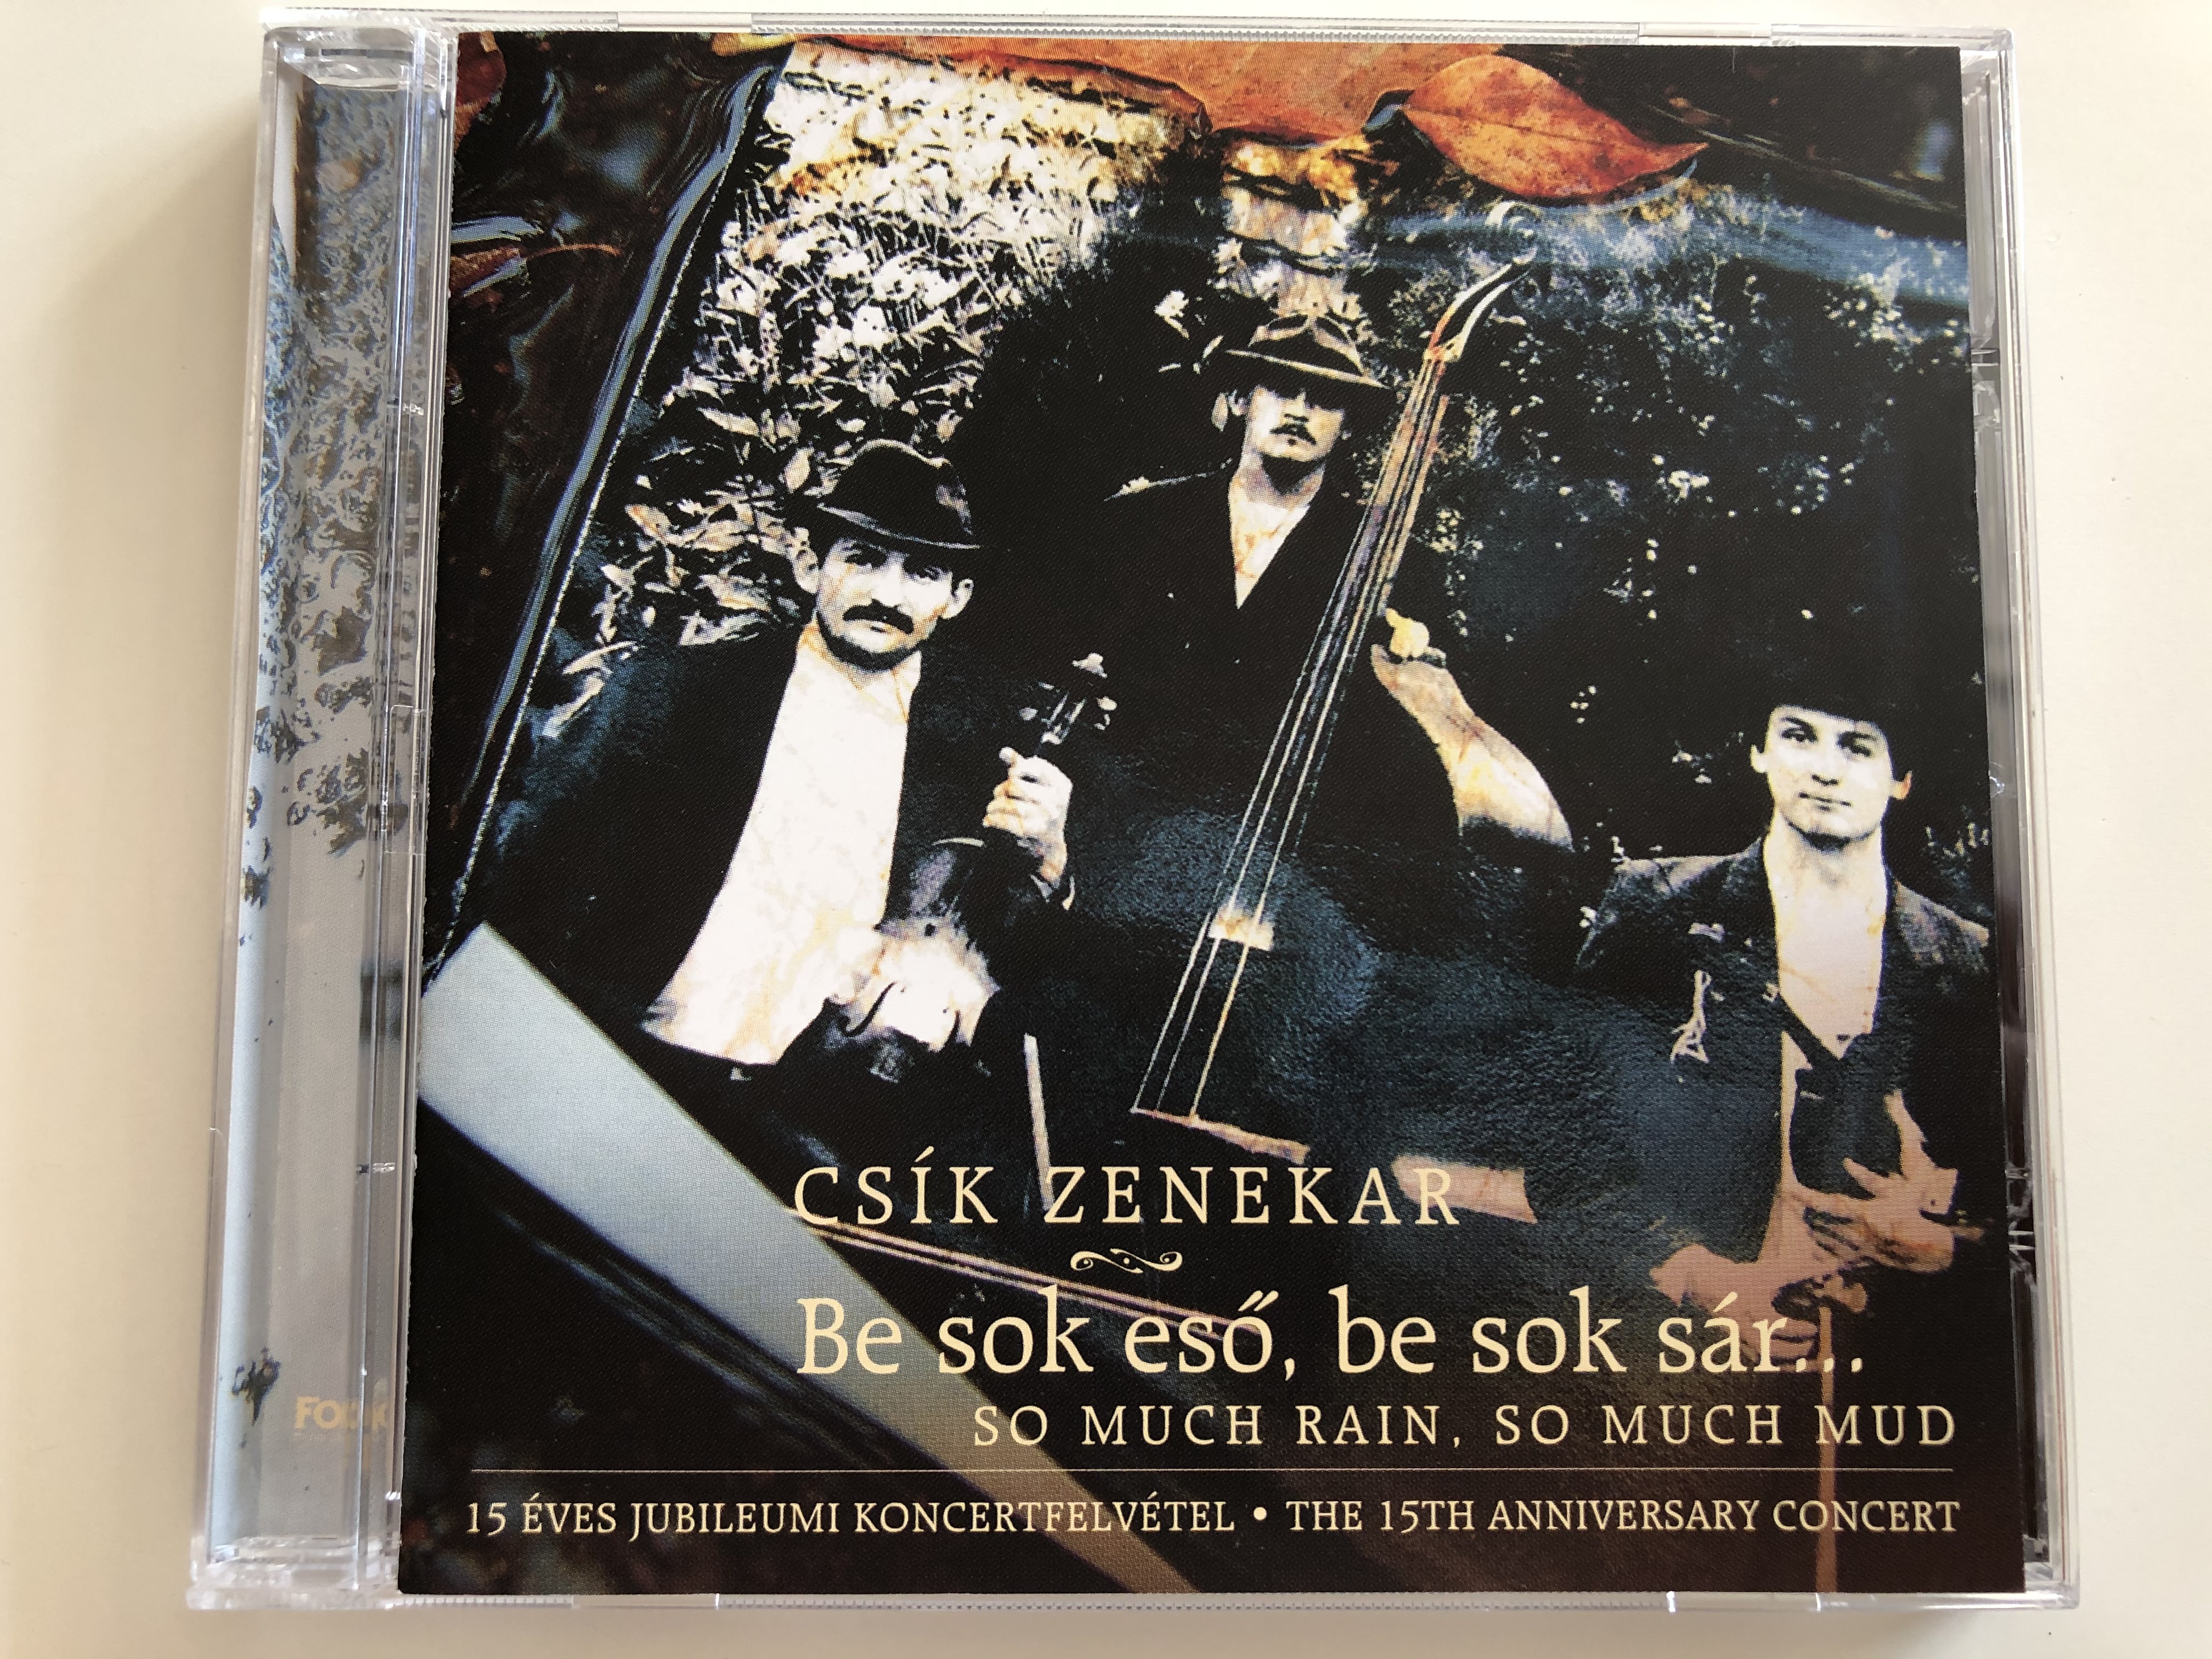 cs-k-zenekar-be-sok-es-be-sok-s-r...-so-much-rain-so-much-mud-15-eves-jubileumi-koncertfelvetel-the-15th-anniversary-concert-fon-records-audio-cd-2004-fa-217-2-1-.jpg